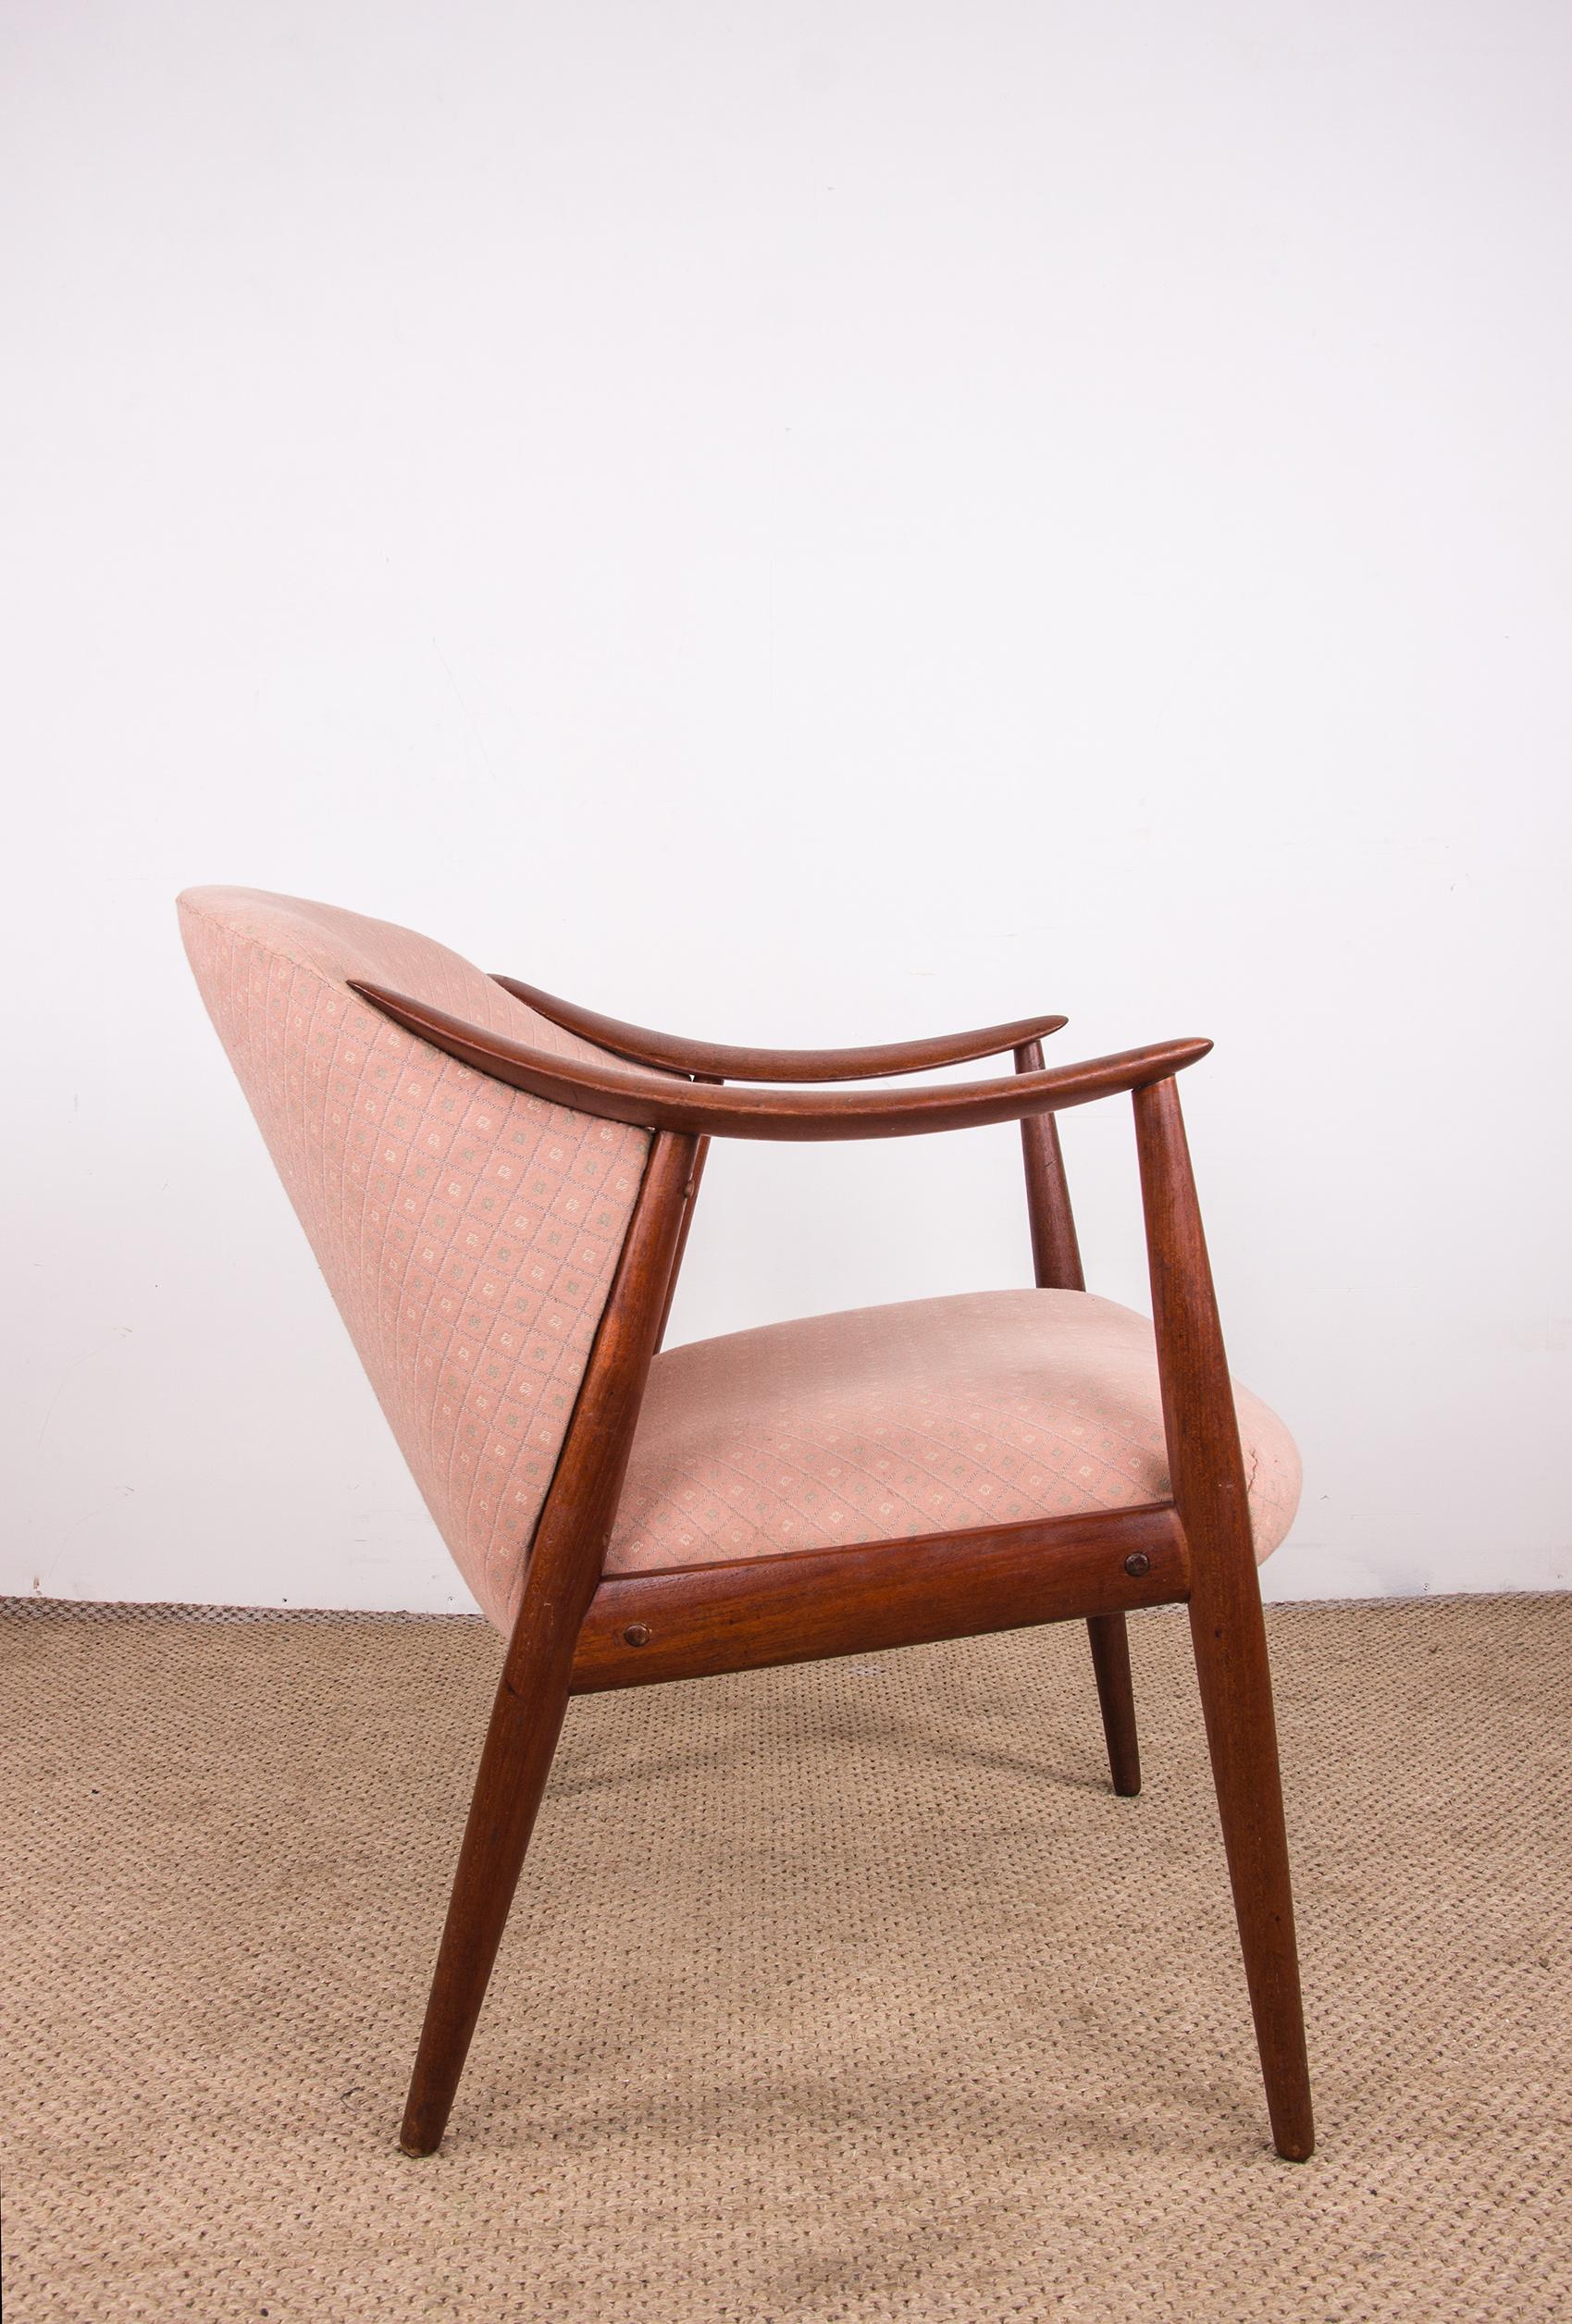 2 Scandinavian armchairs in Teak and Fabric model Tyrol by Gerhard Berg/Westnofa For Sale 4